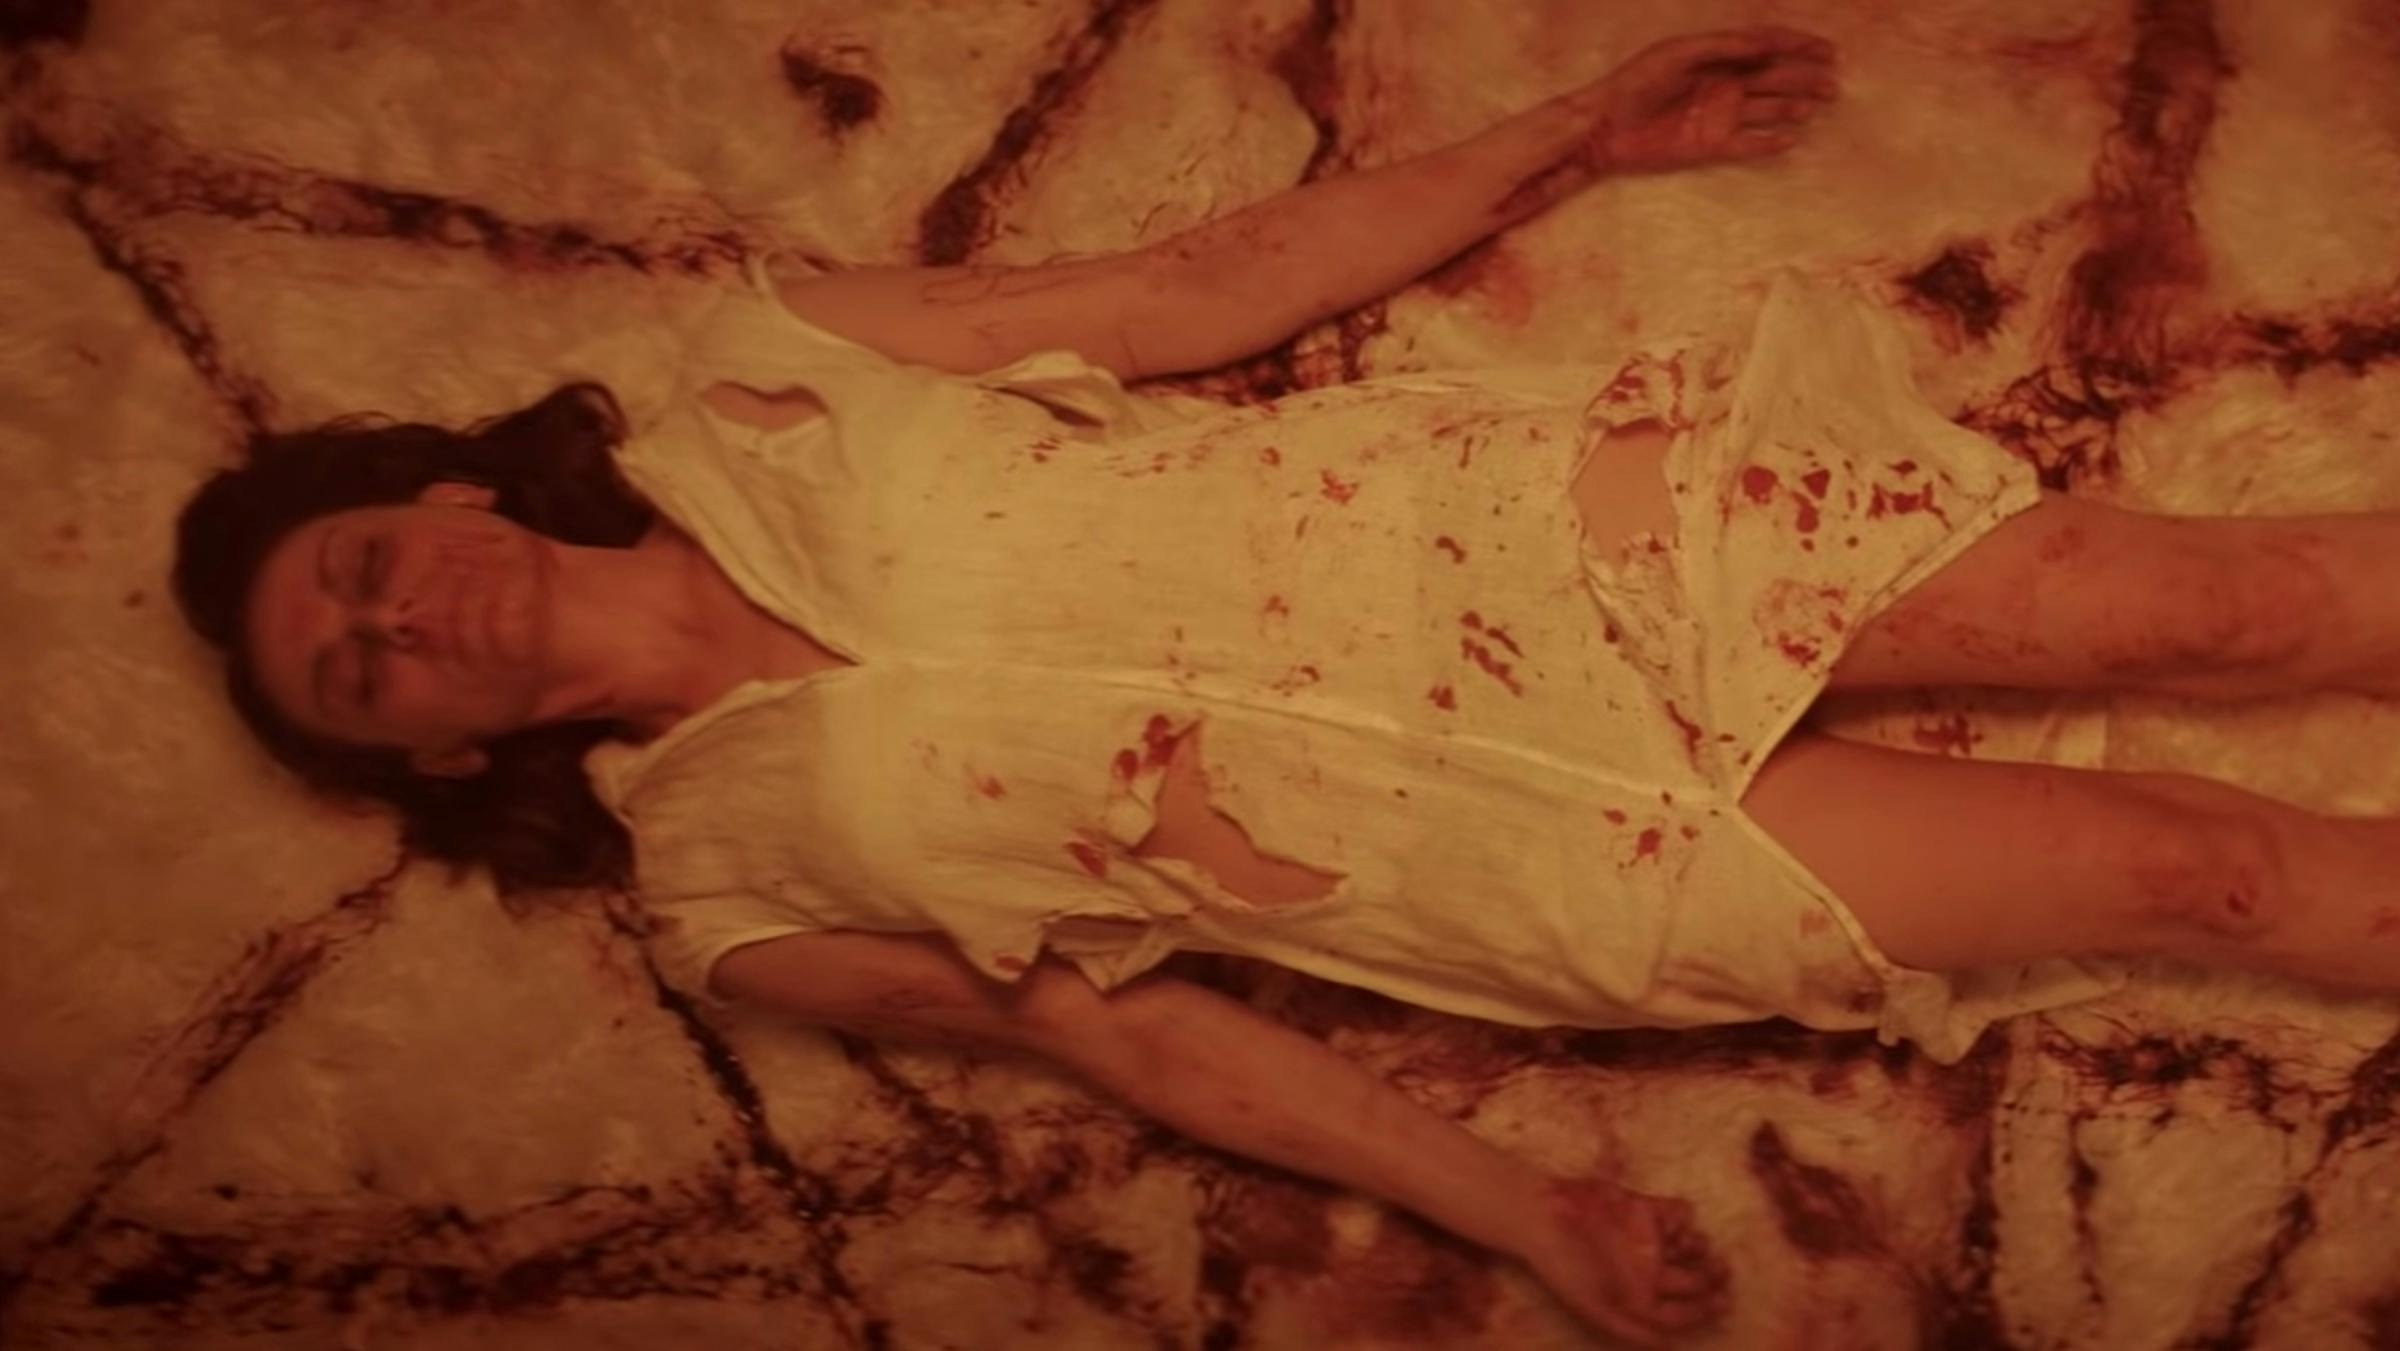 Whitechapel's New Video Is A Horrifying Possession Story